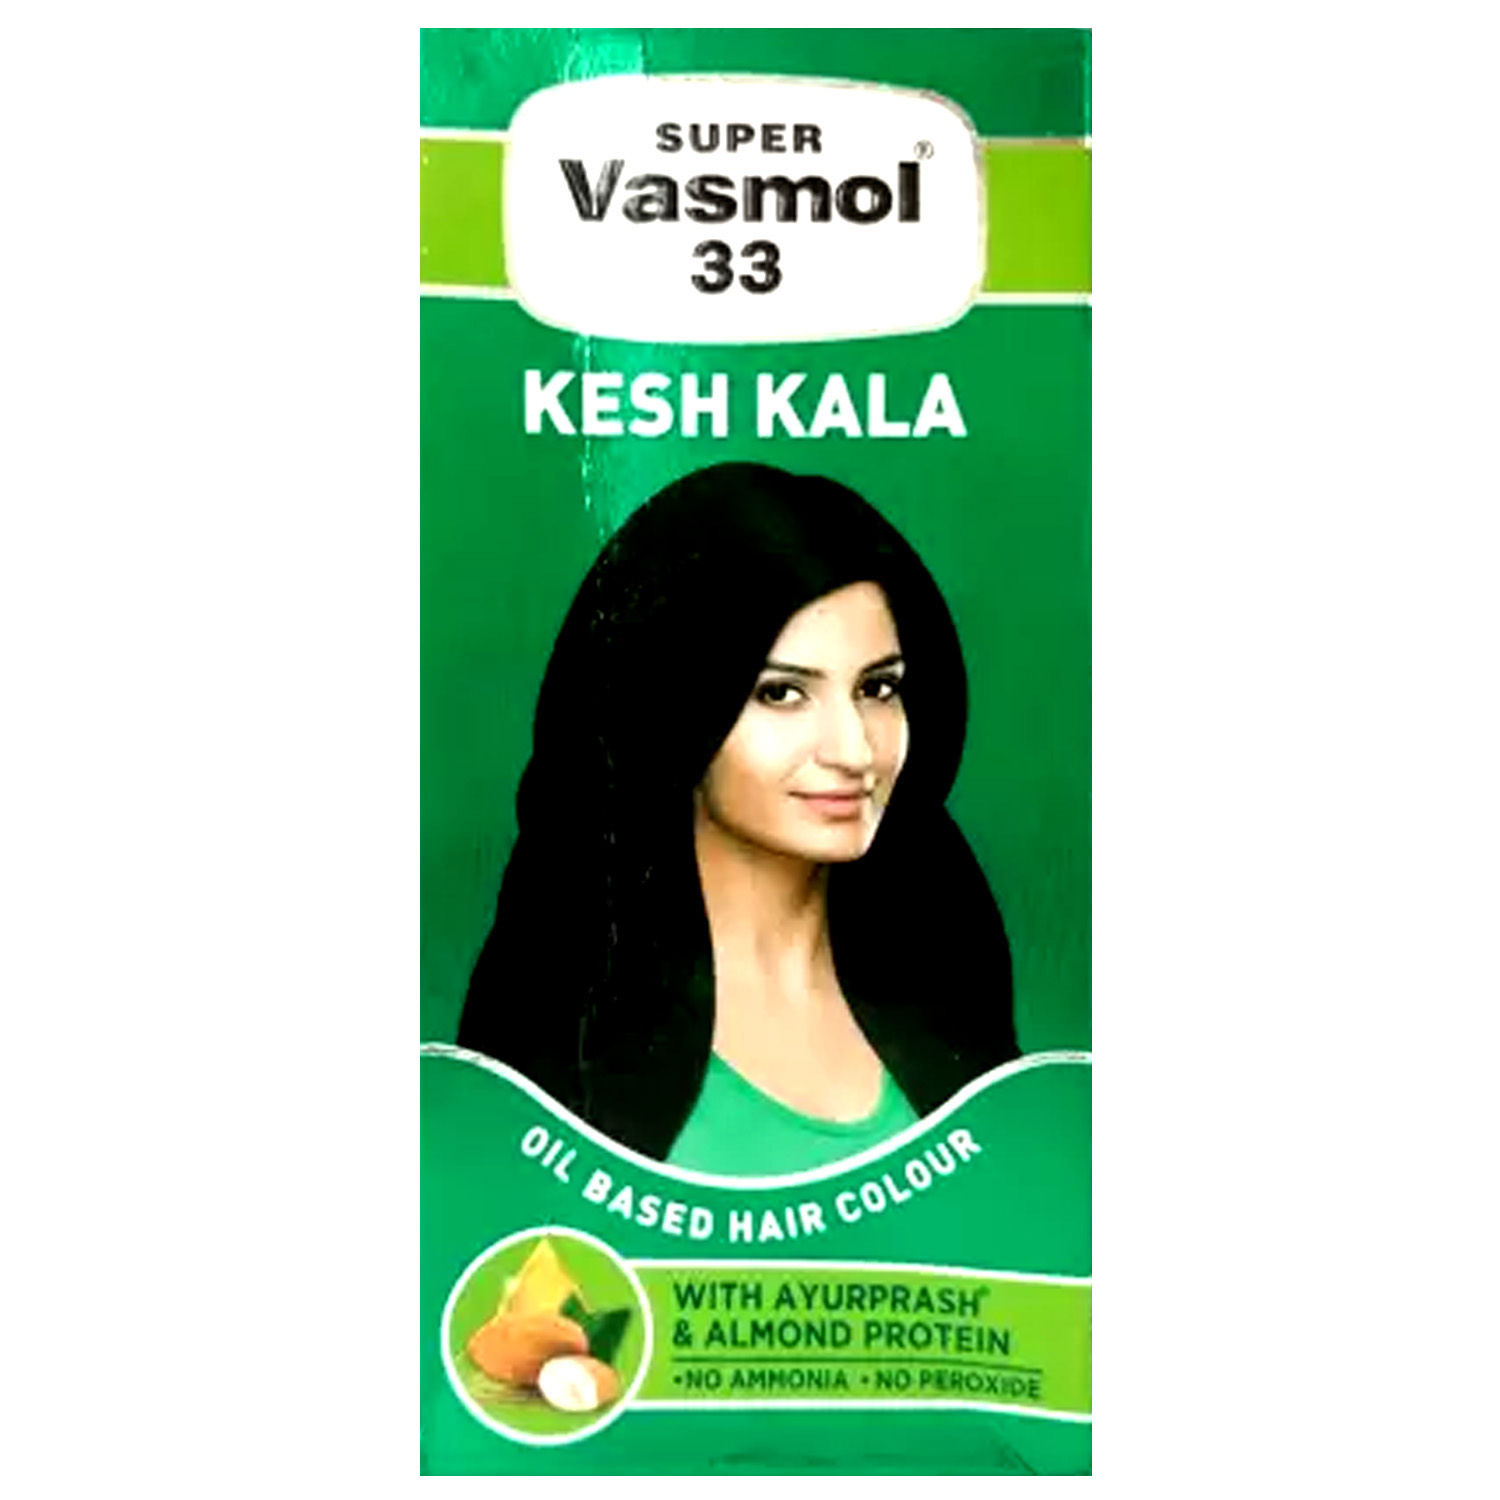 How To Use Super Vasmol 33 Kesh Kala ft Soniya Tiwari  Soniya Tiwari is  amazed by Super Vasmol 33 Kesh Kala Hair Colour Watch as she explains the  easy method to